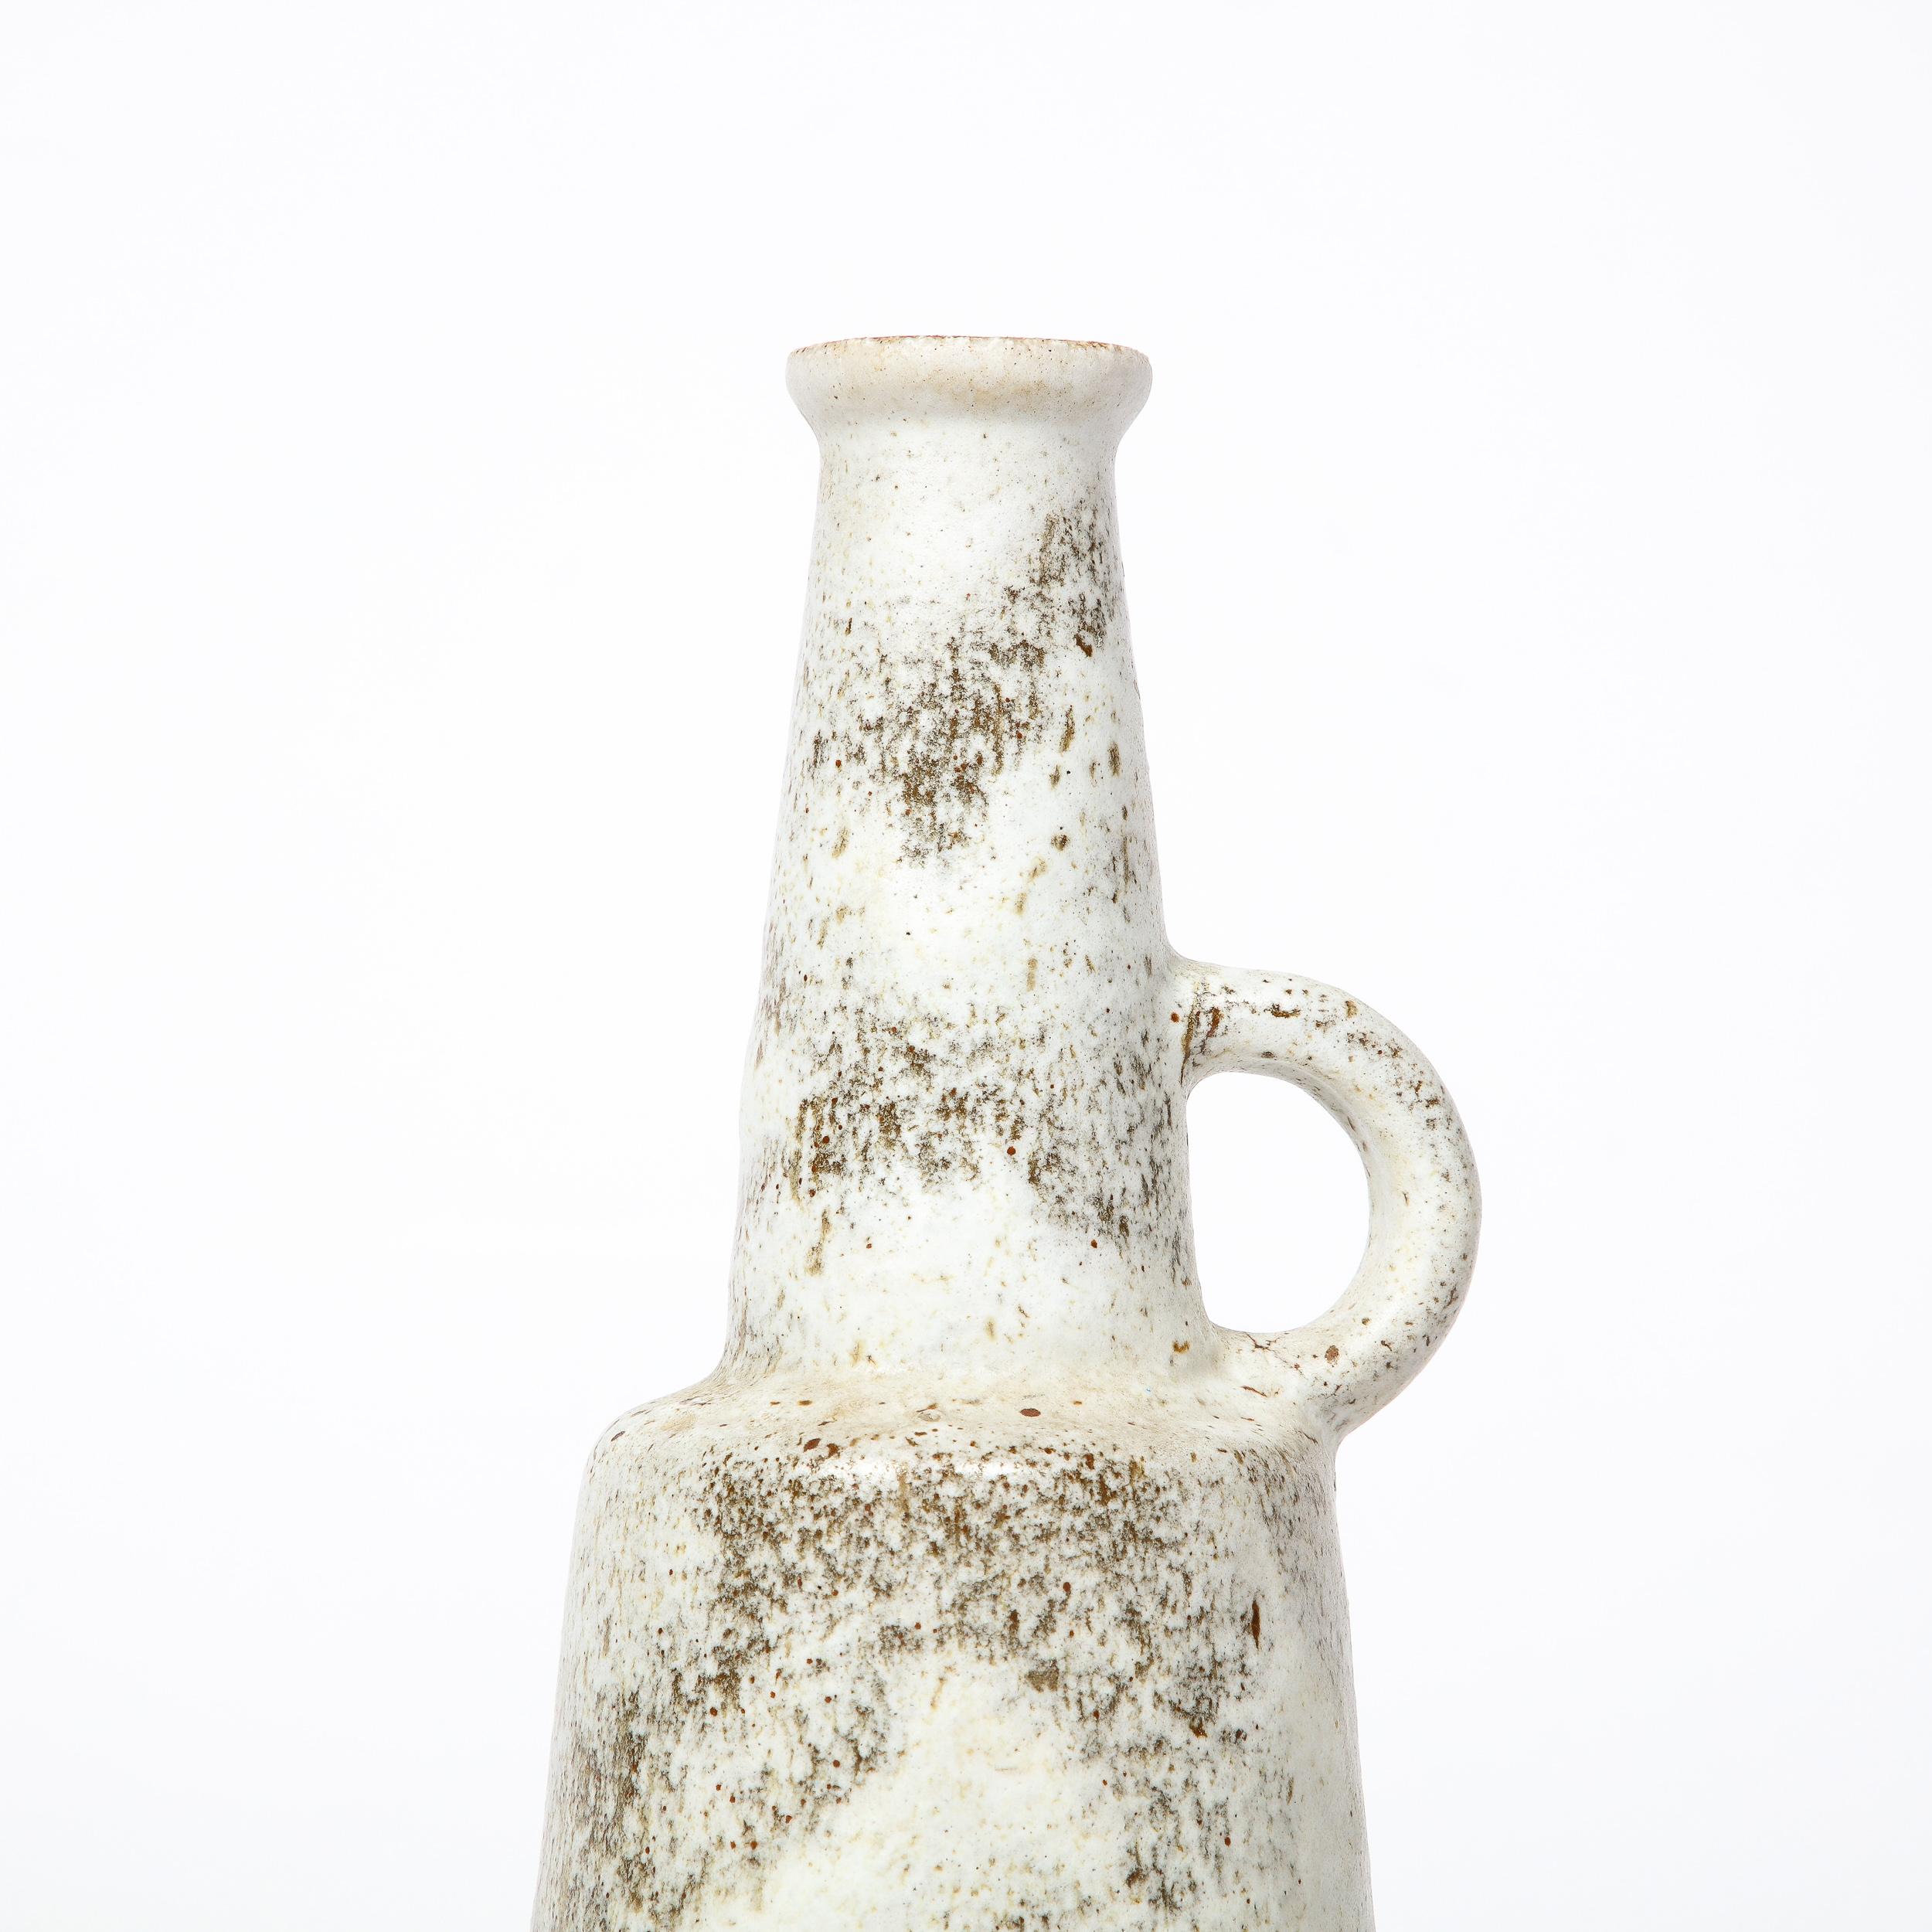 American Mid-Century Modernist Ceramic Vase in Speckled Black & White Glaze w/ Handle For Sale